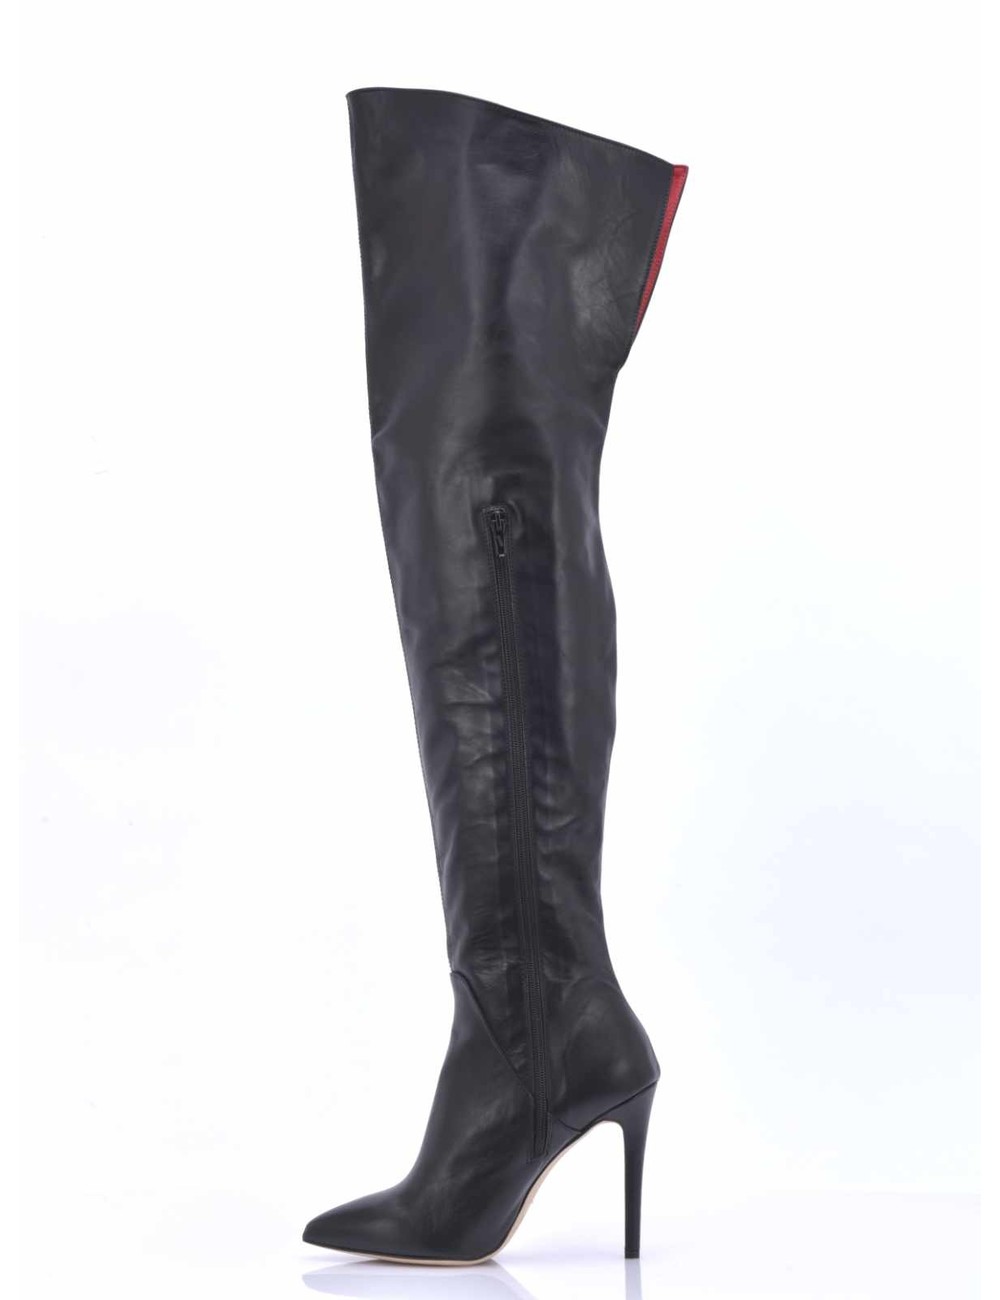 Sanctum  High Italian THIGH boots VESTA-10 with stiletto heels in genuine leather